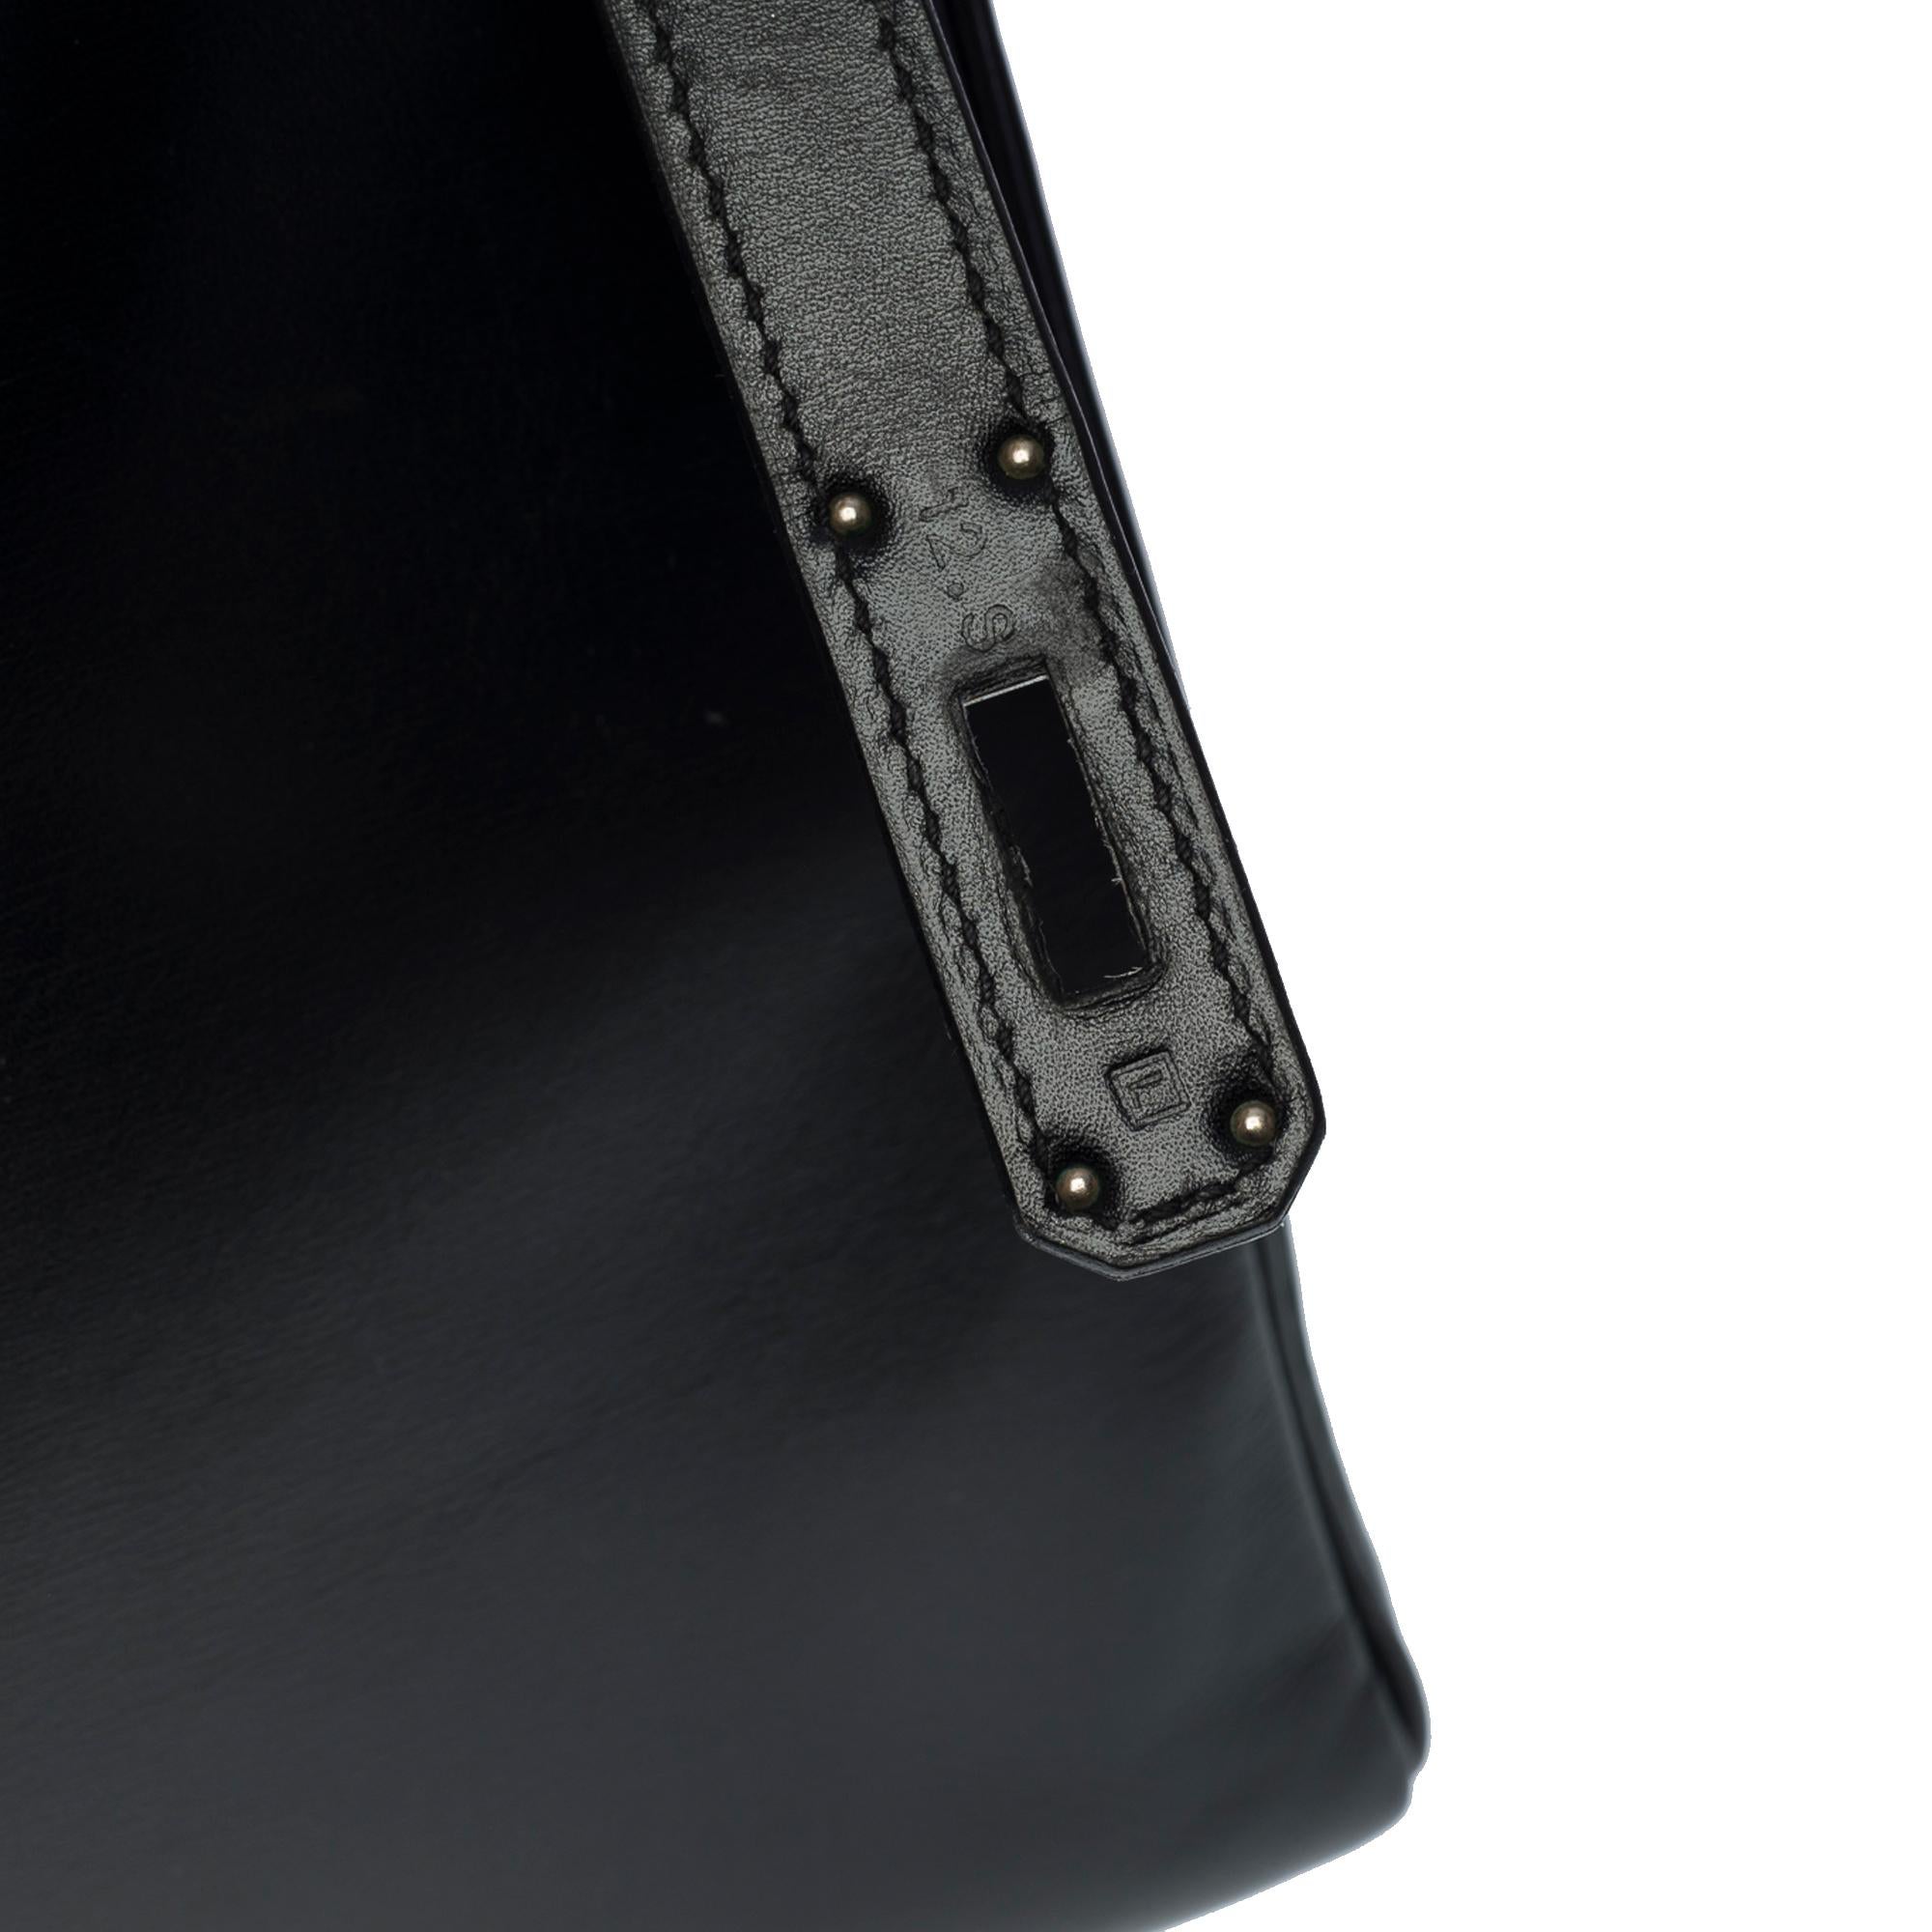 Rare Hermès Kelly 32 retourne handbag strap in black box calf leather, SHW 2